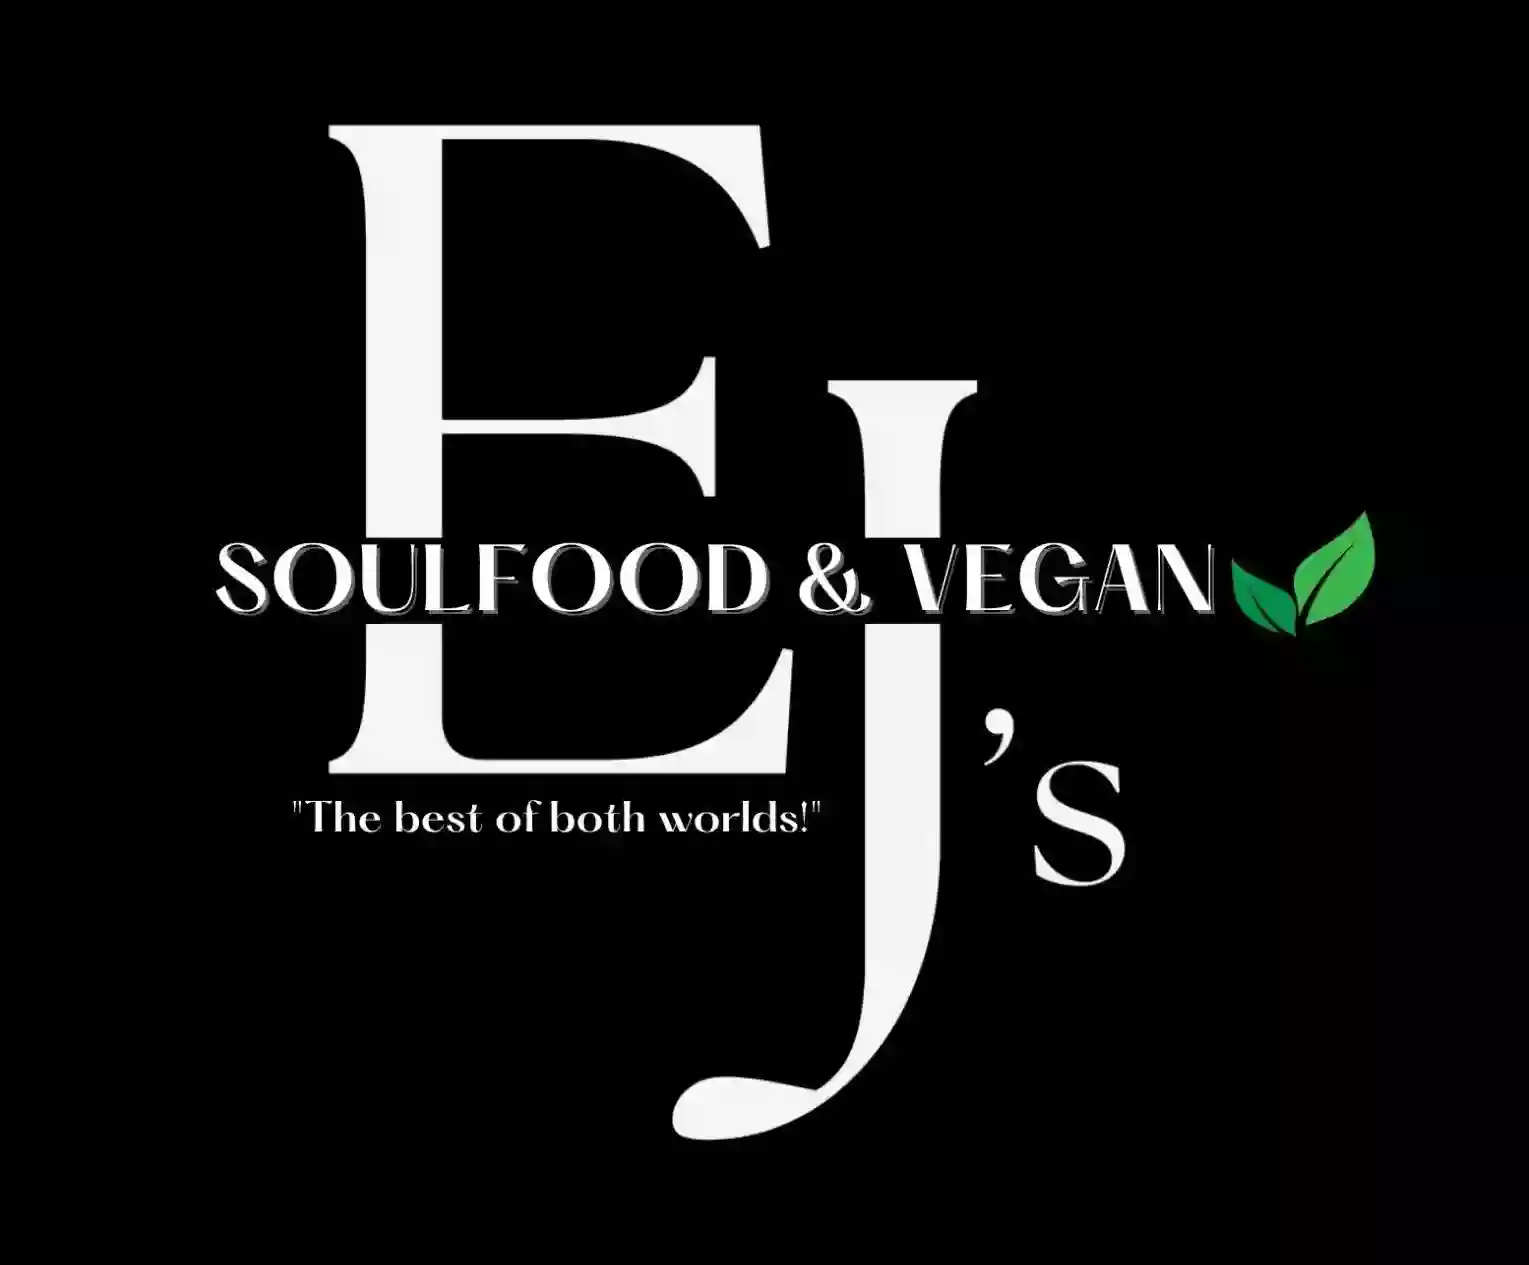 EJ's Soul Food & Vegan Bar & Grill